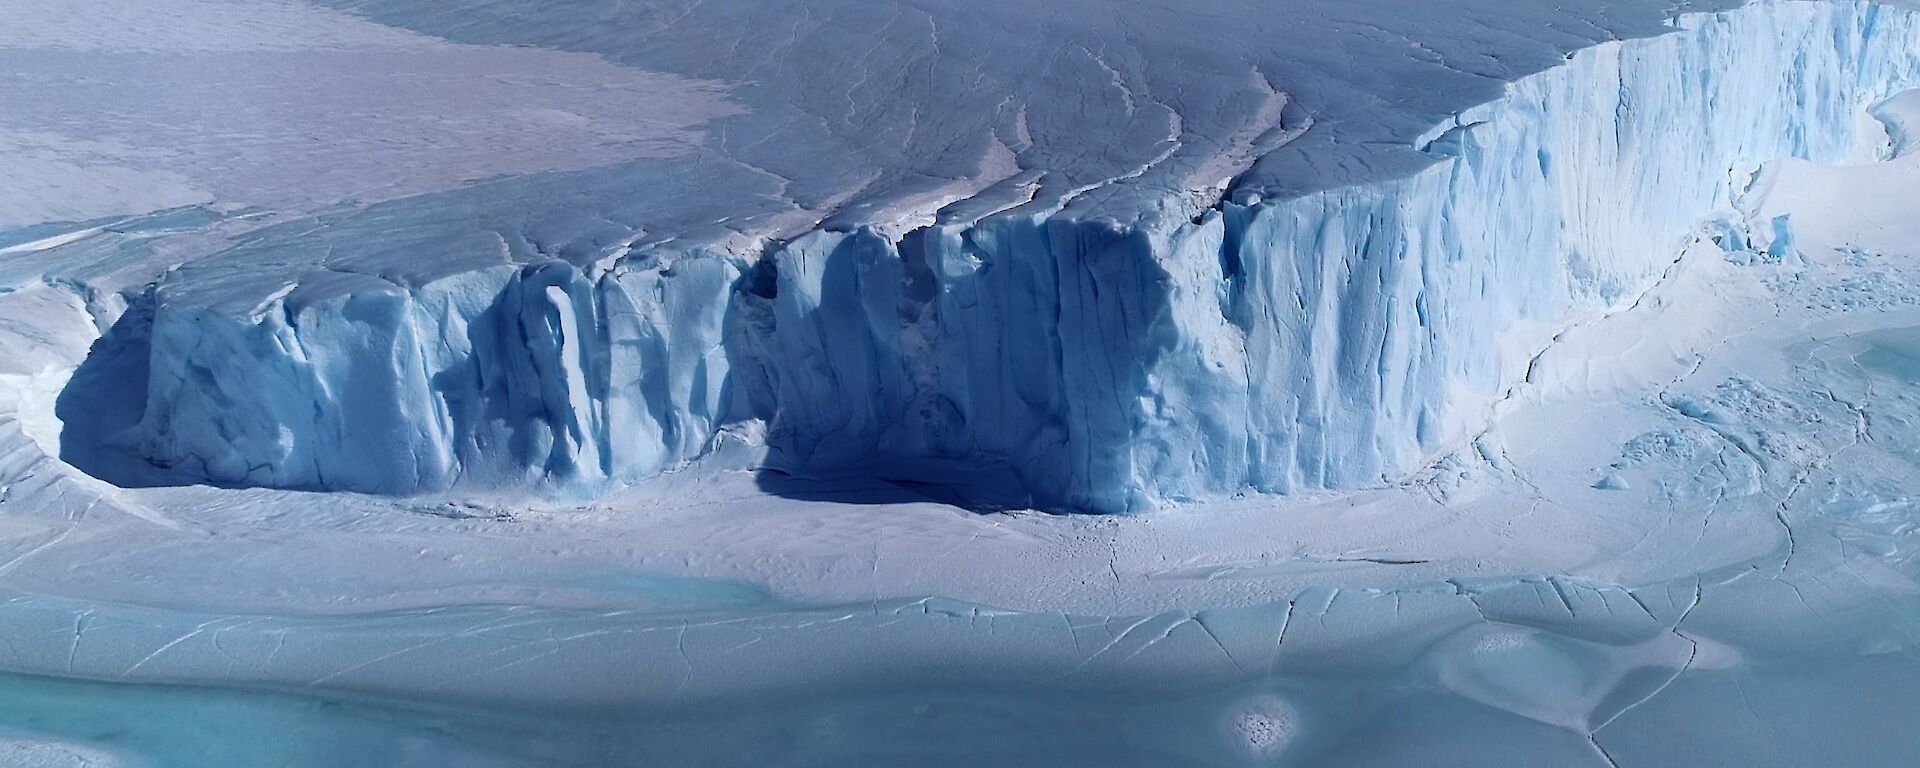 ice cliff meets sea ice